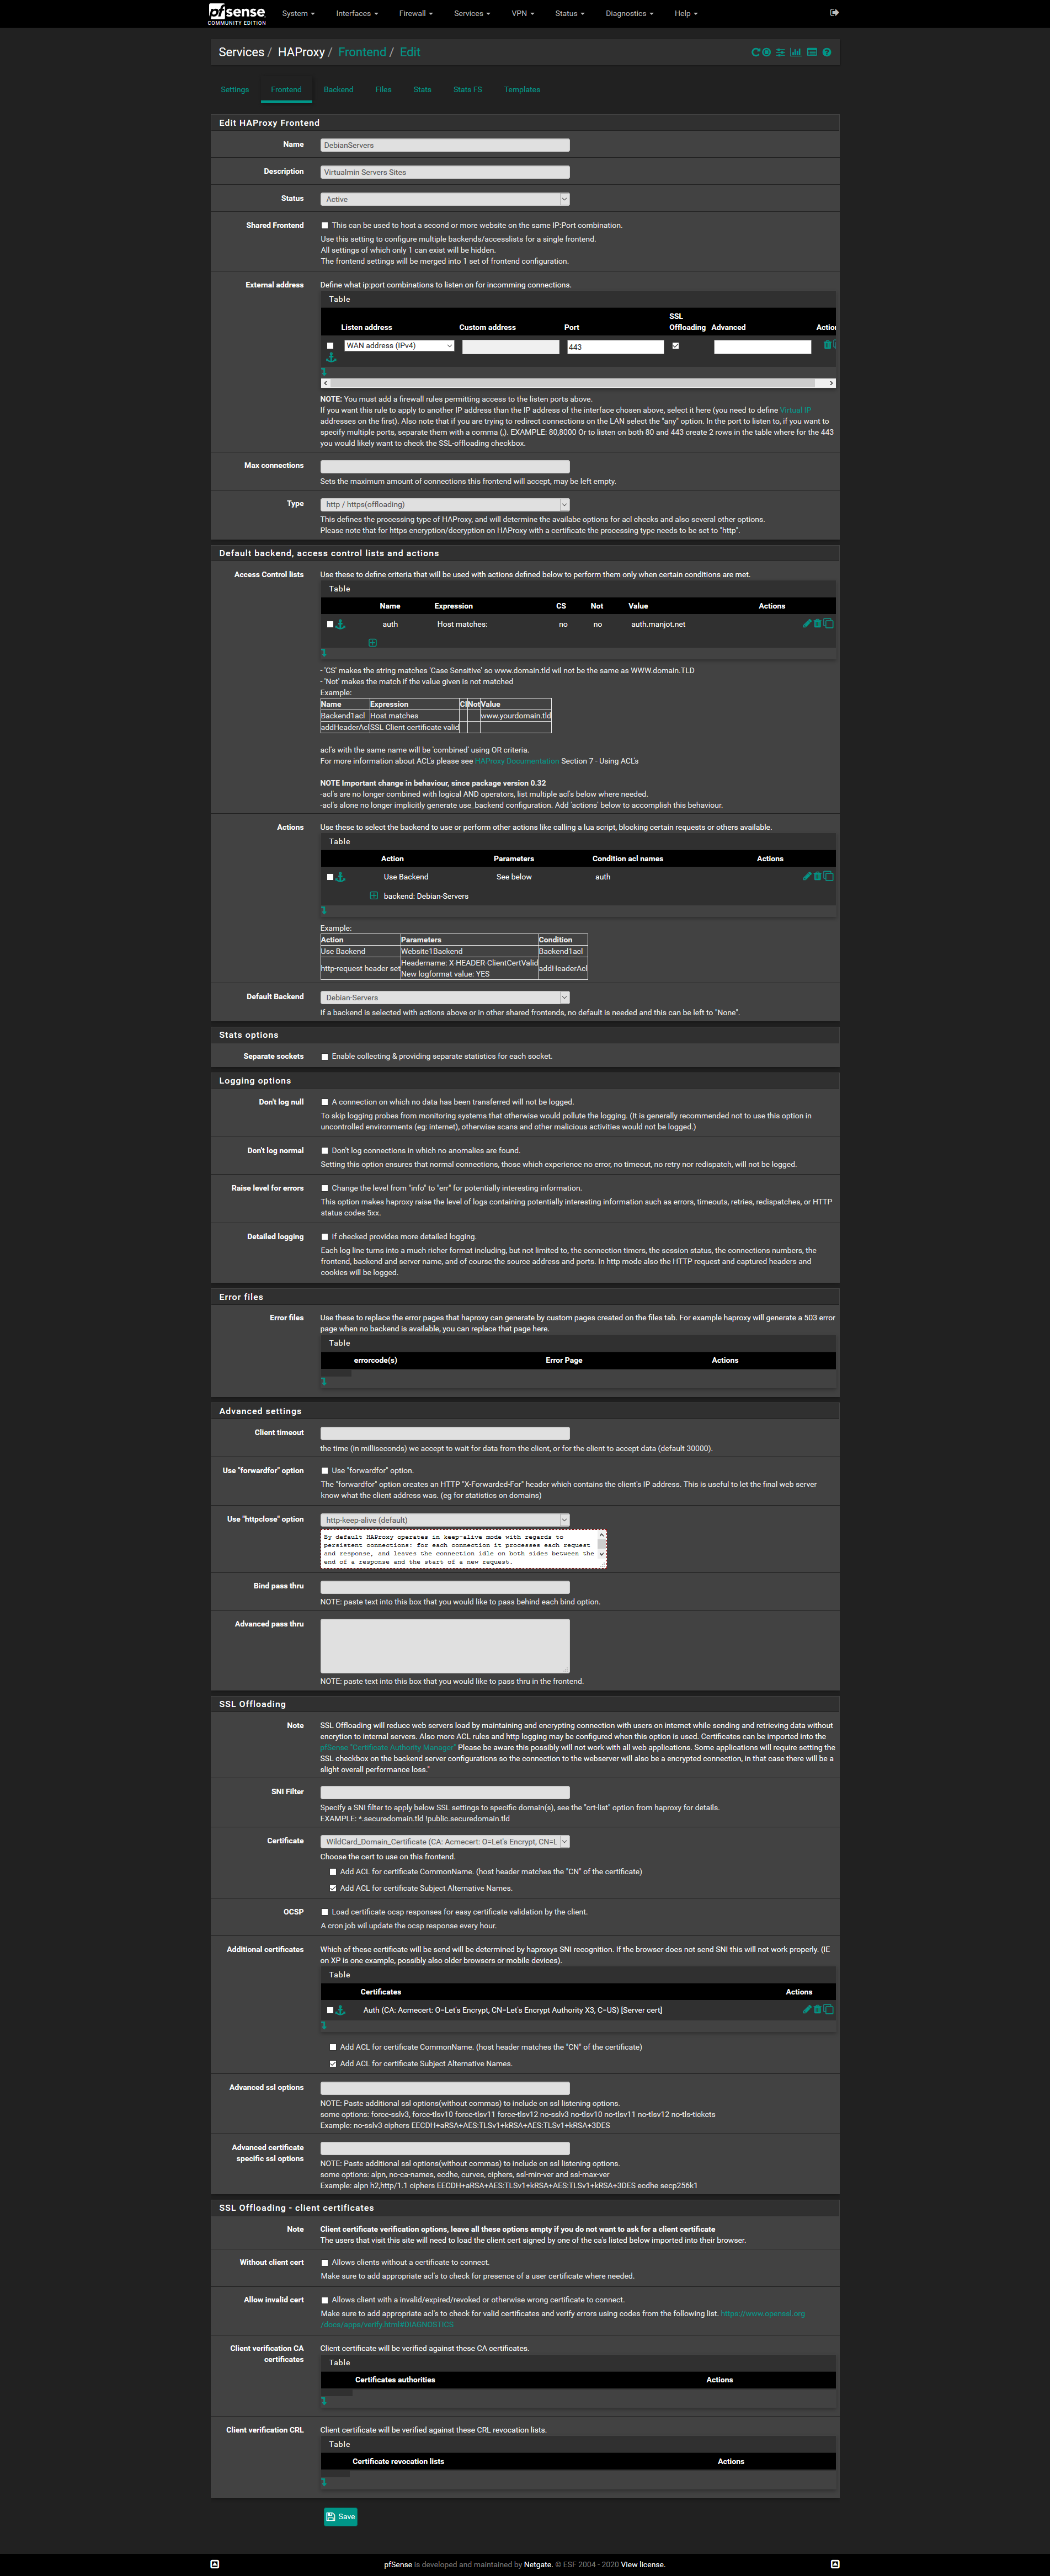 Screenshot_2020-03-12 pfSense manjot net - Services HAProxy Frontend Edit.png